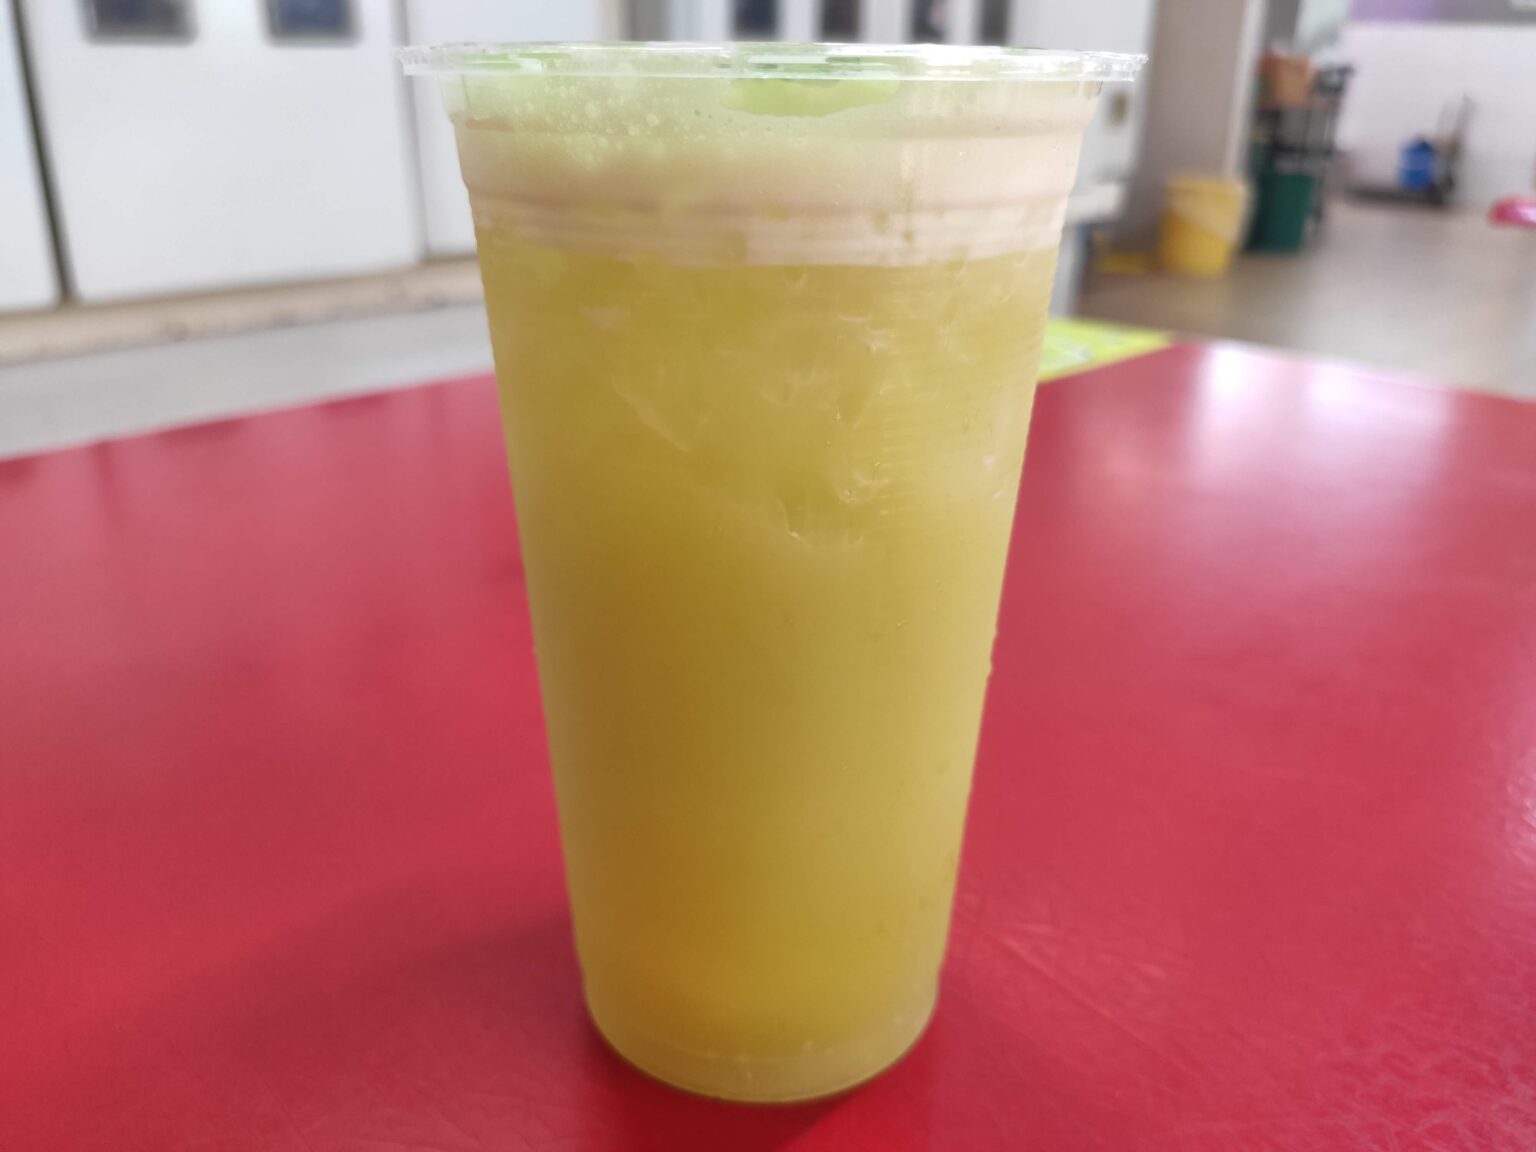 Tian Mi Sugar Cane: Sugarcane Juice